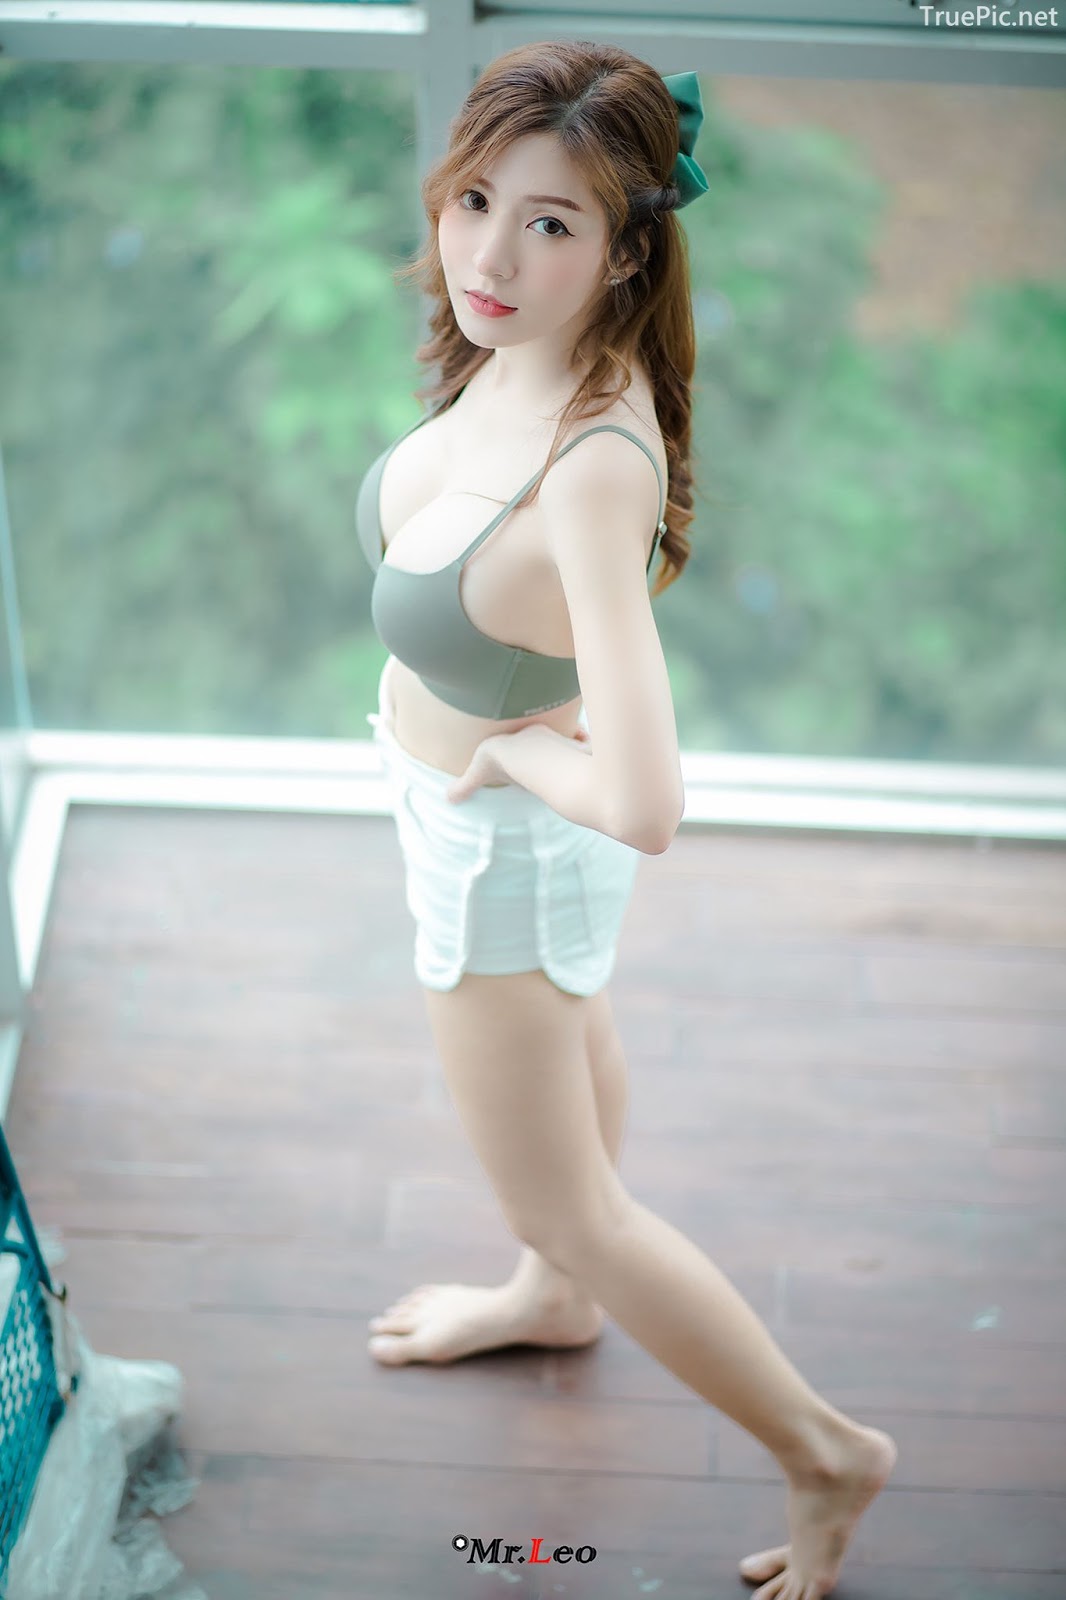 Thailand hot model - Chompoo Radadao Keawla-ied - You're always my good dream - TruePic.net - Picture 25